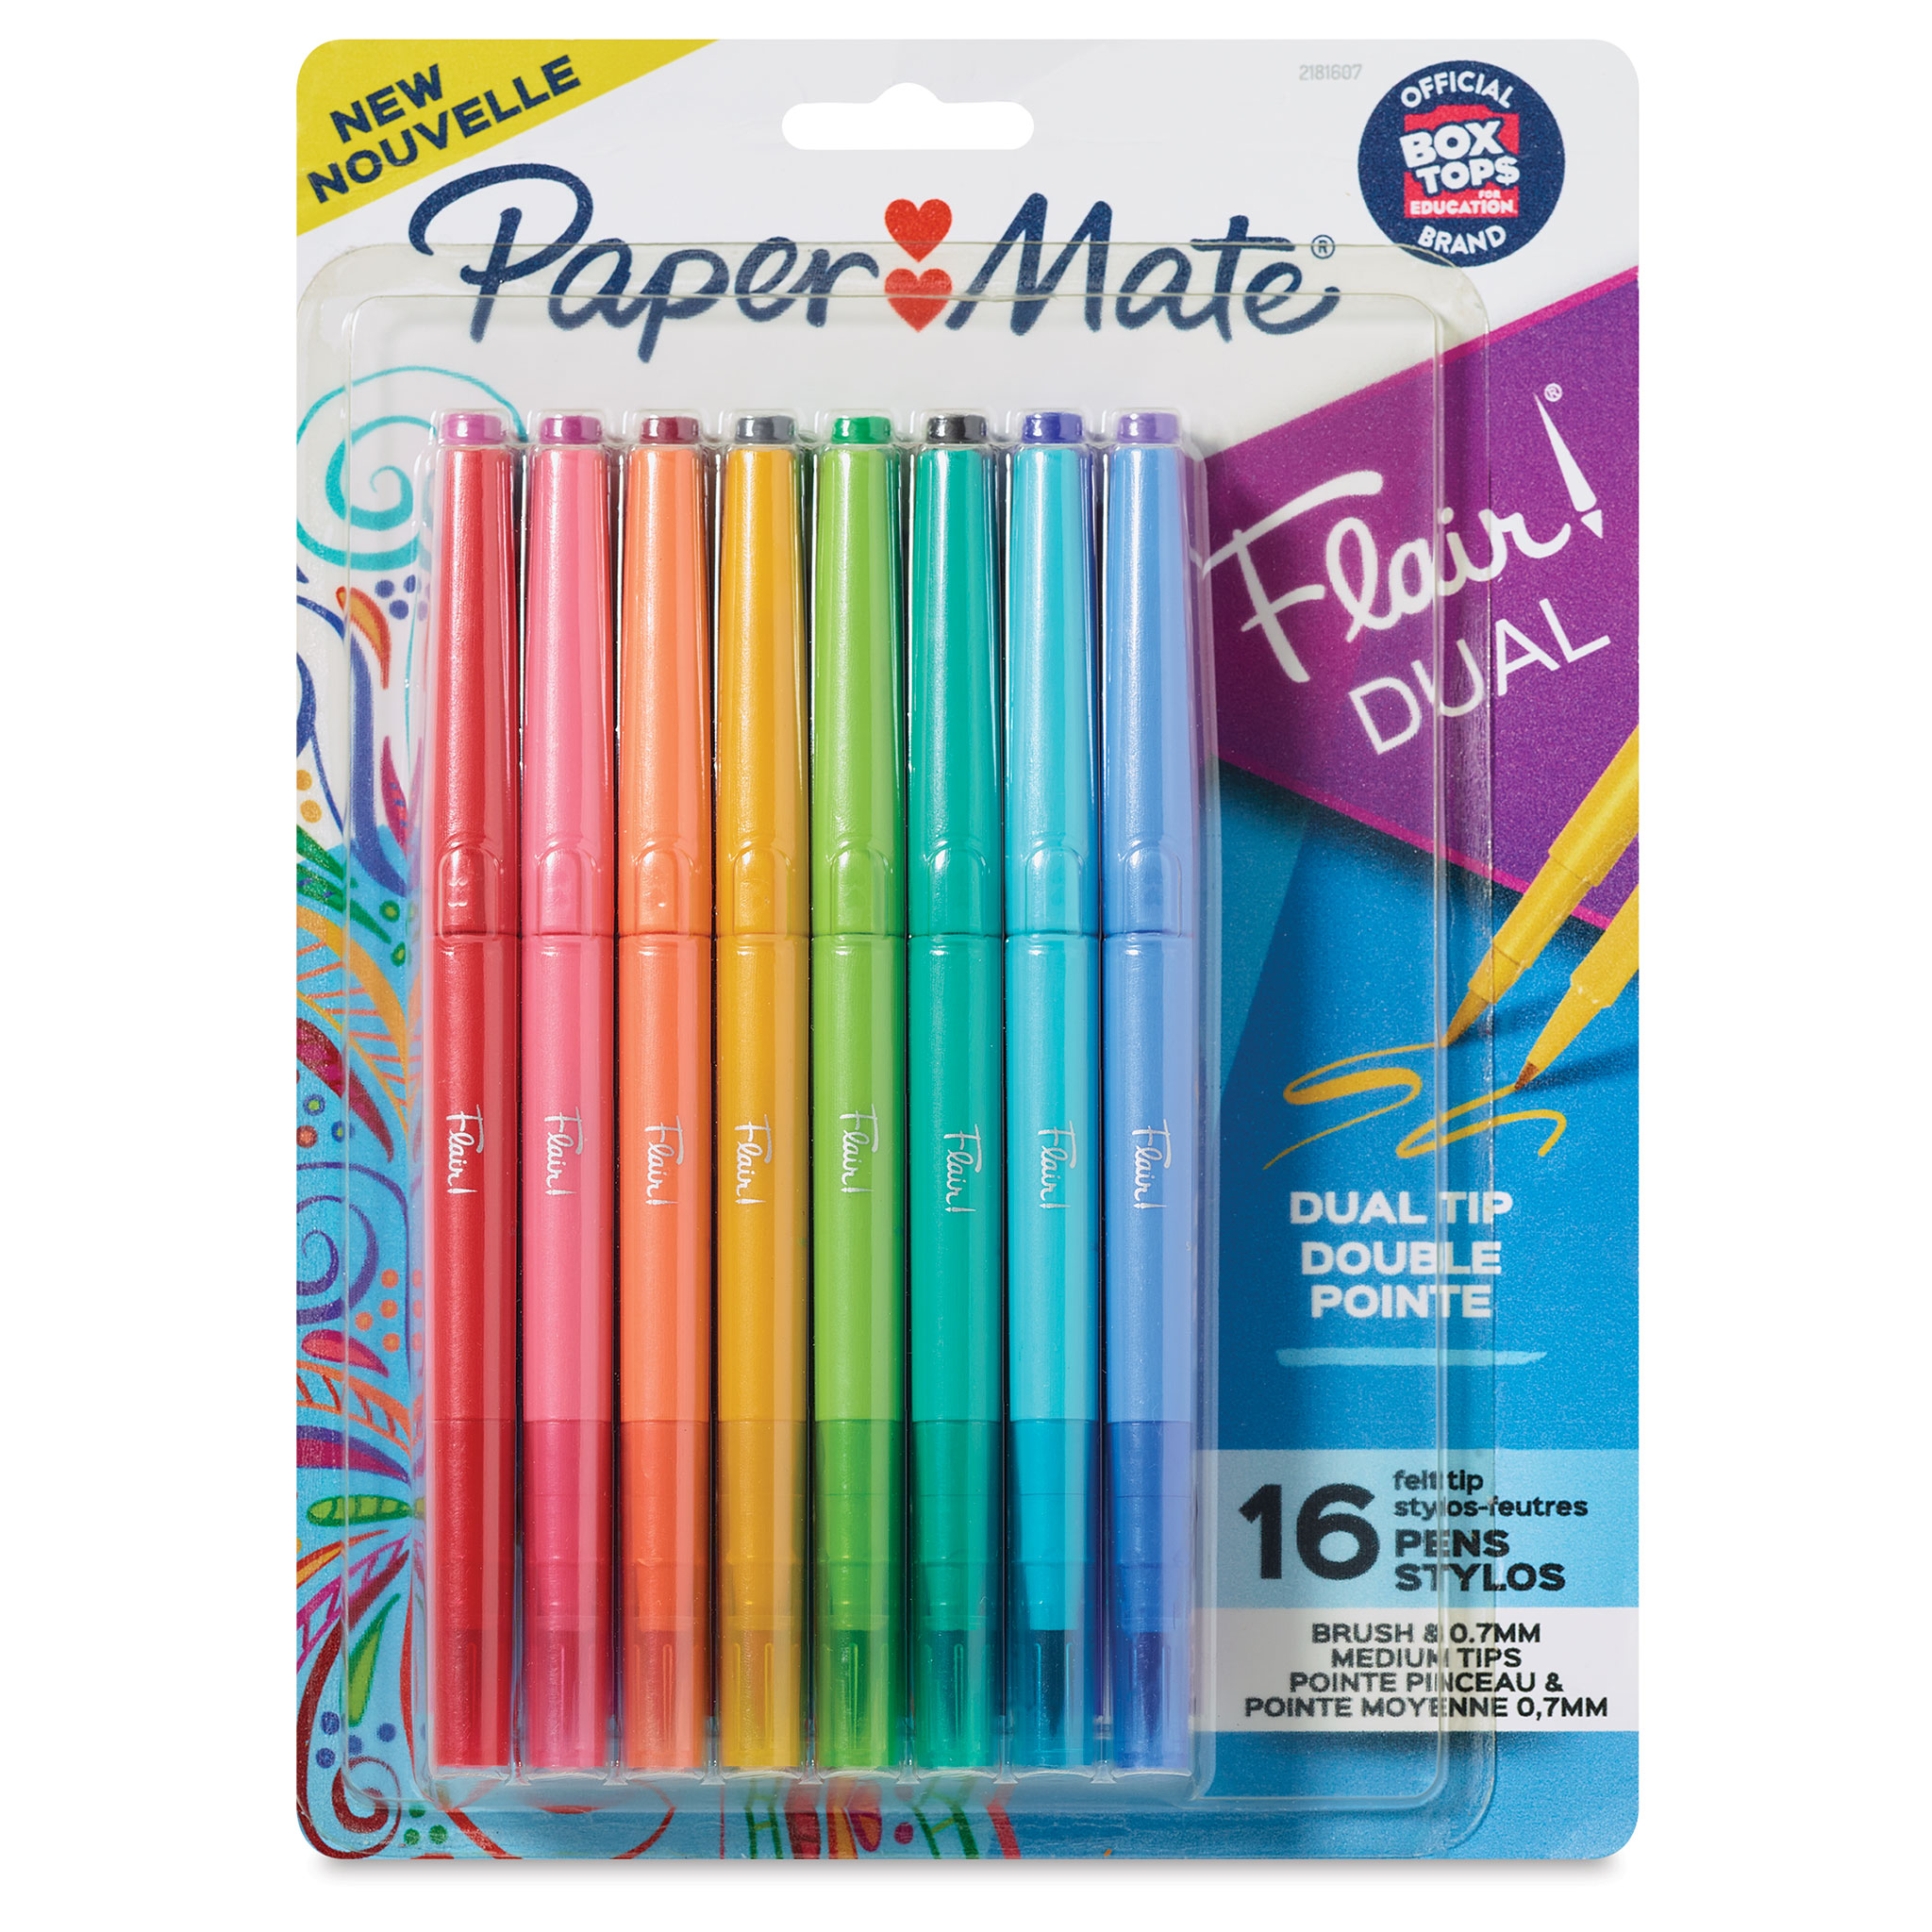 Paper Mate Flair Dual Tip Pen Sets